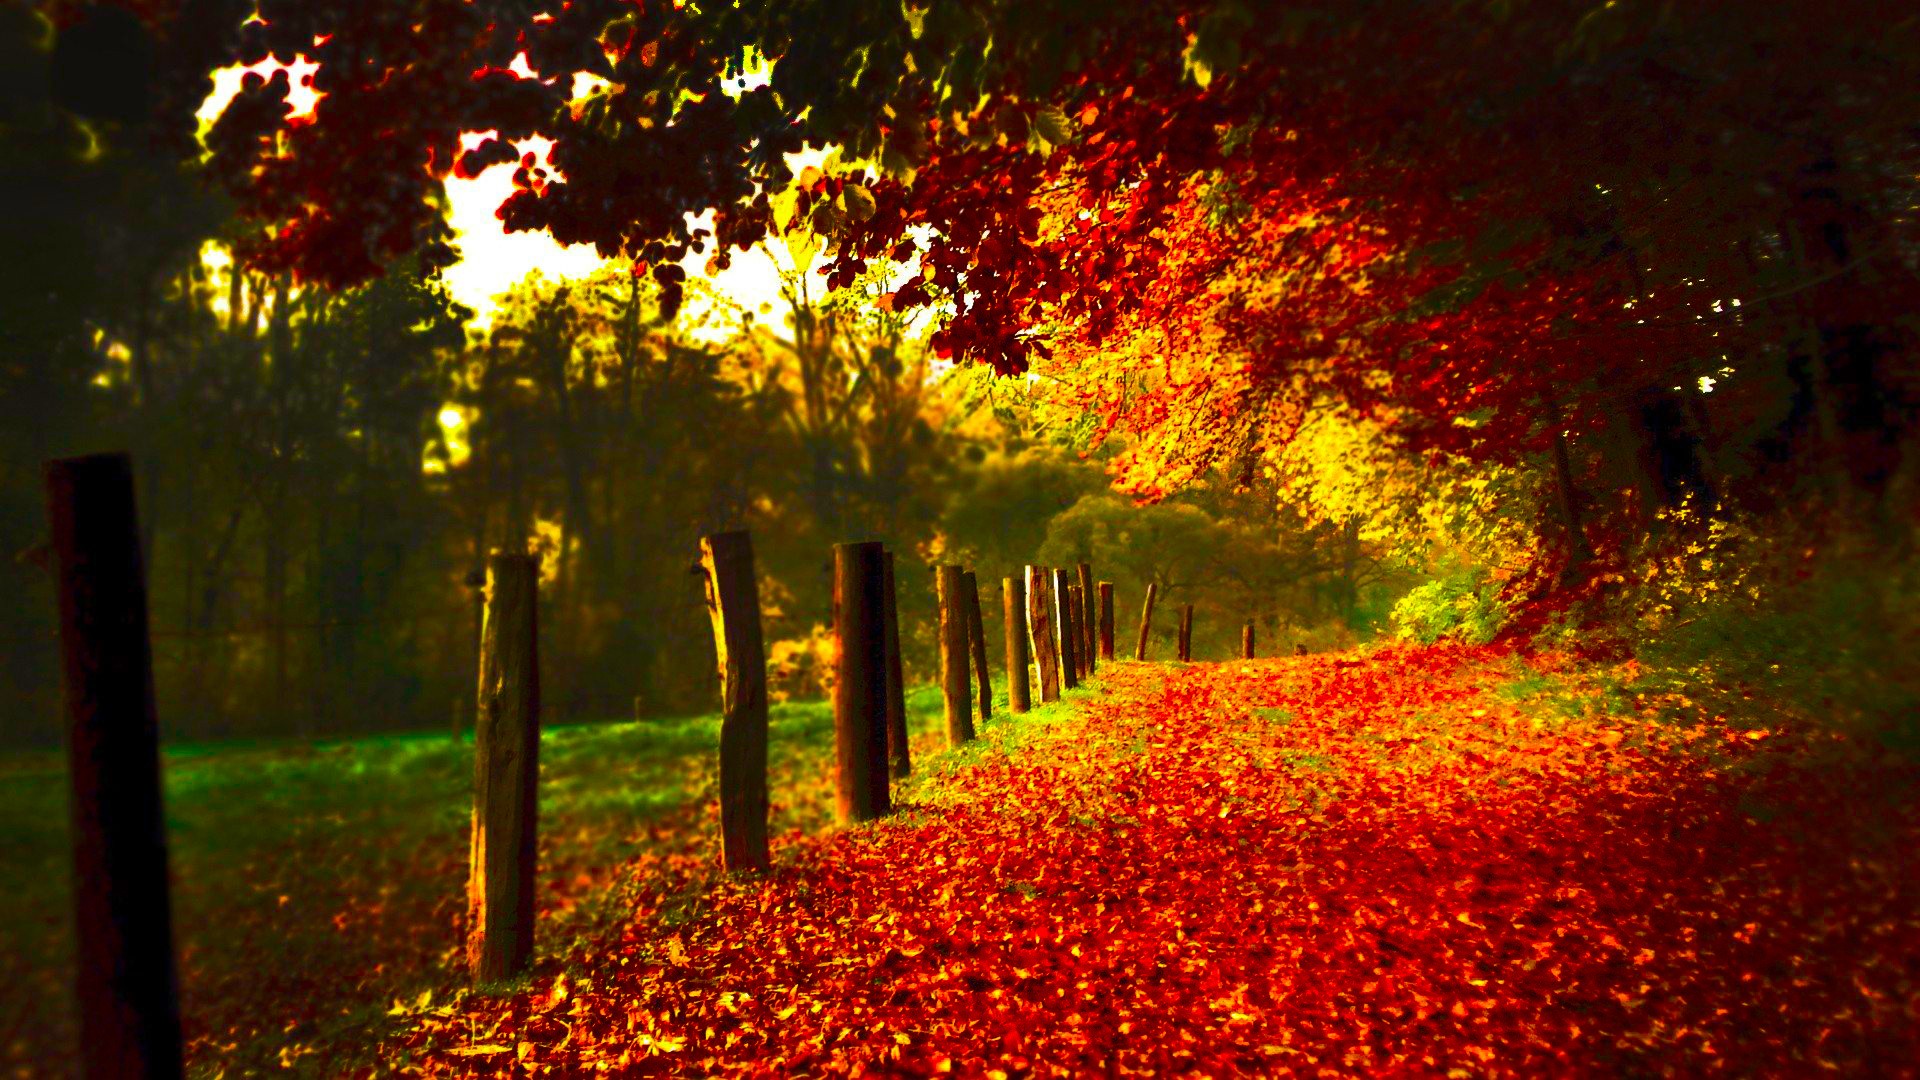 Autumn Scenery Id Buzzerg